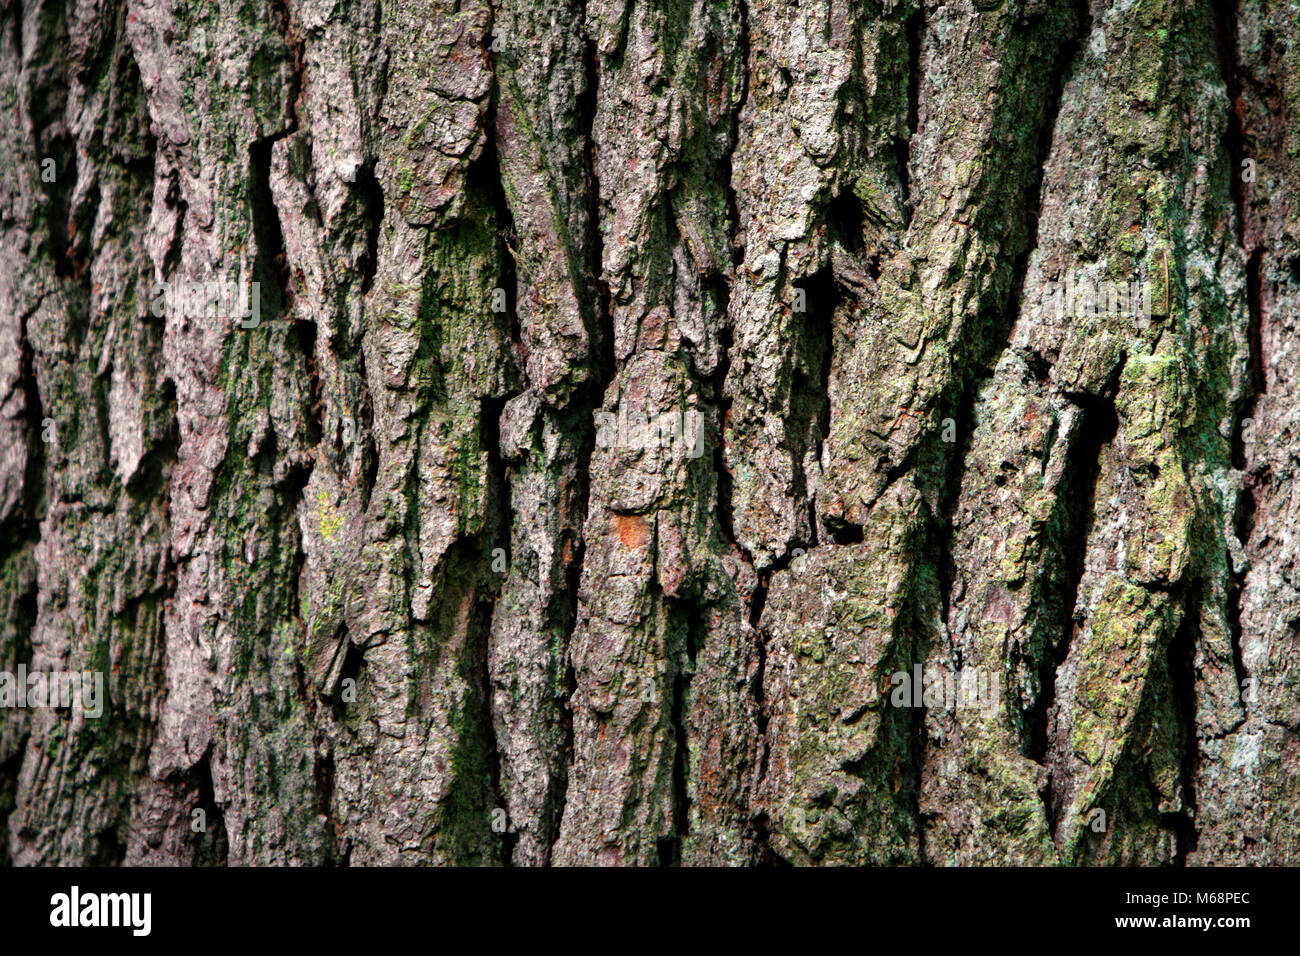 Norway Maple Tree Bark Pattern Stock Photo Alamy